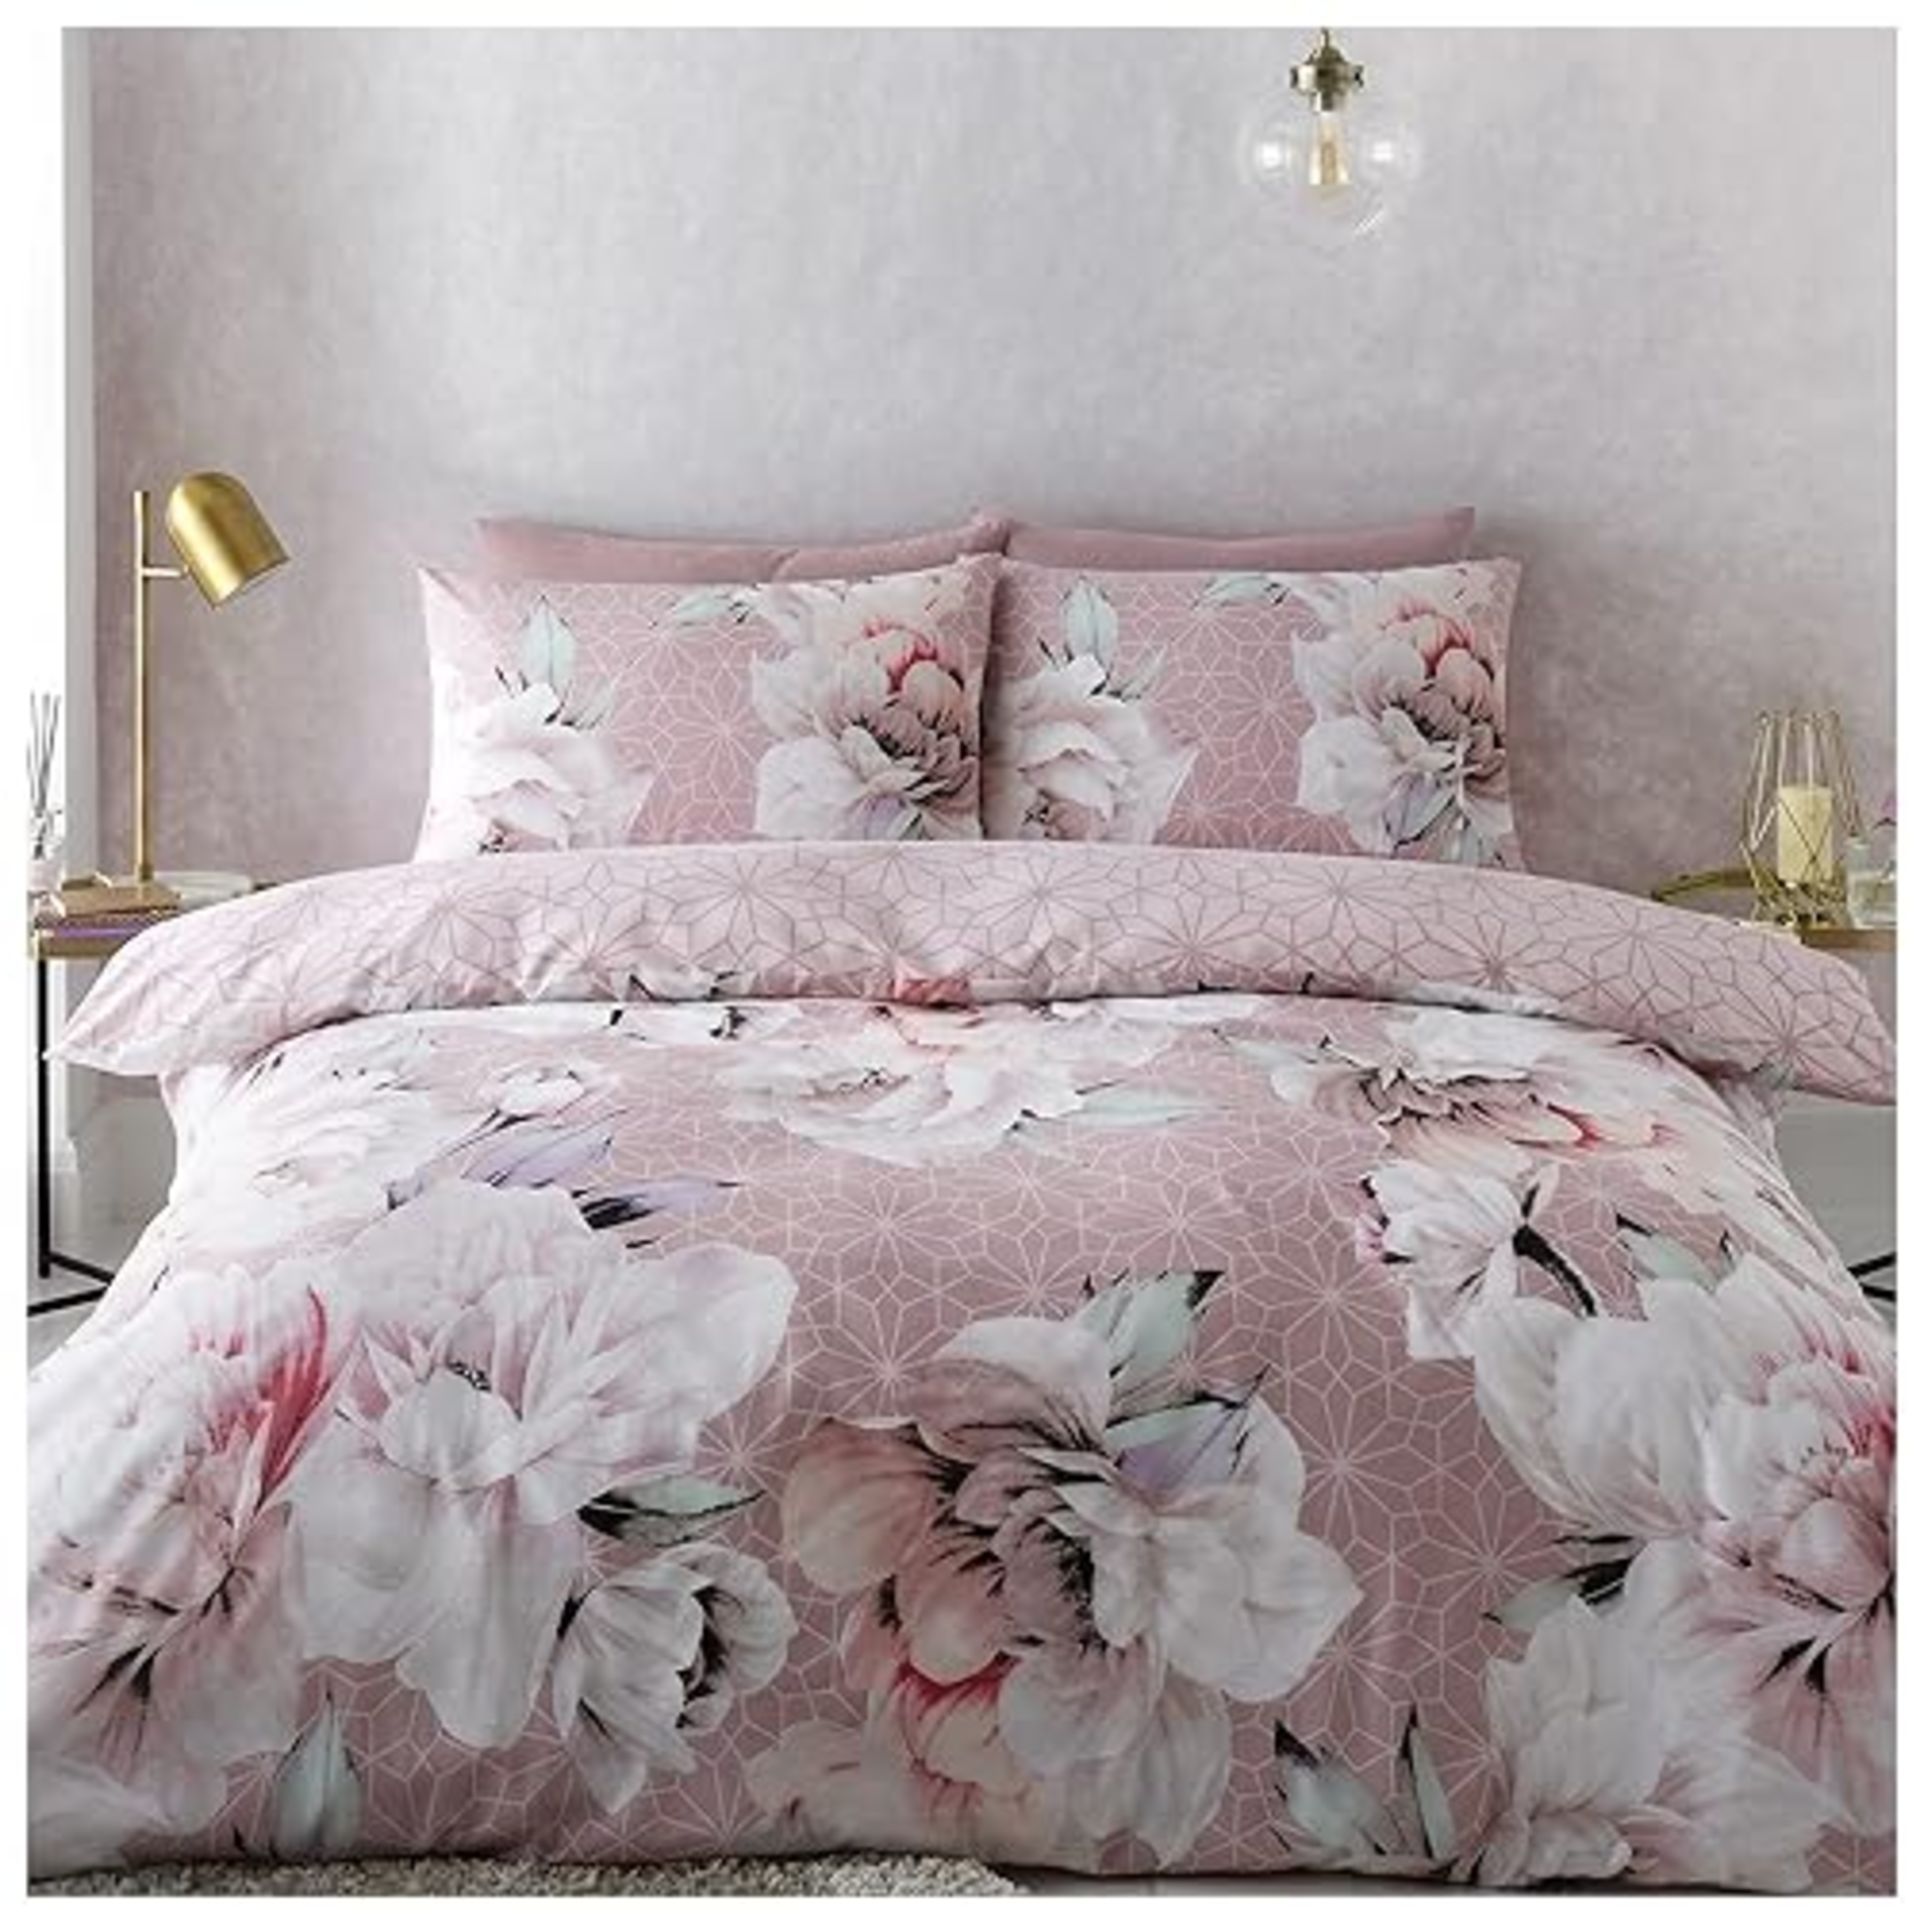 GC GAVENO CAVAILIA Large Floral Patterned Duvet Cover Watercolour Blush Pink, Easy Care Poly Cotton